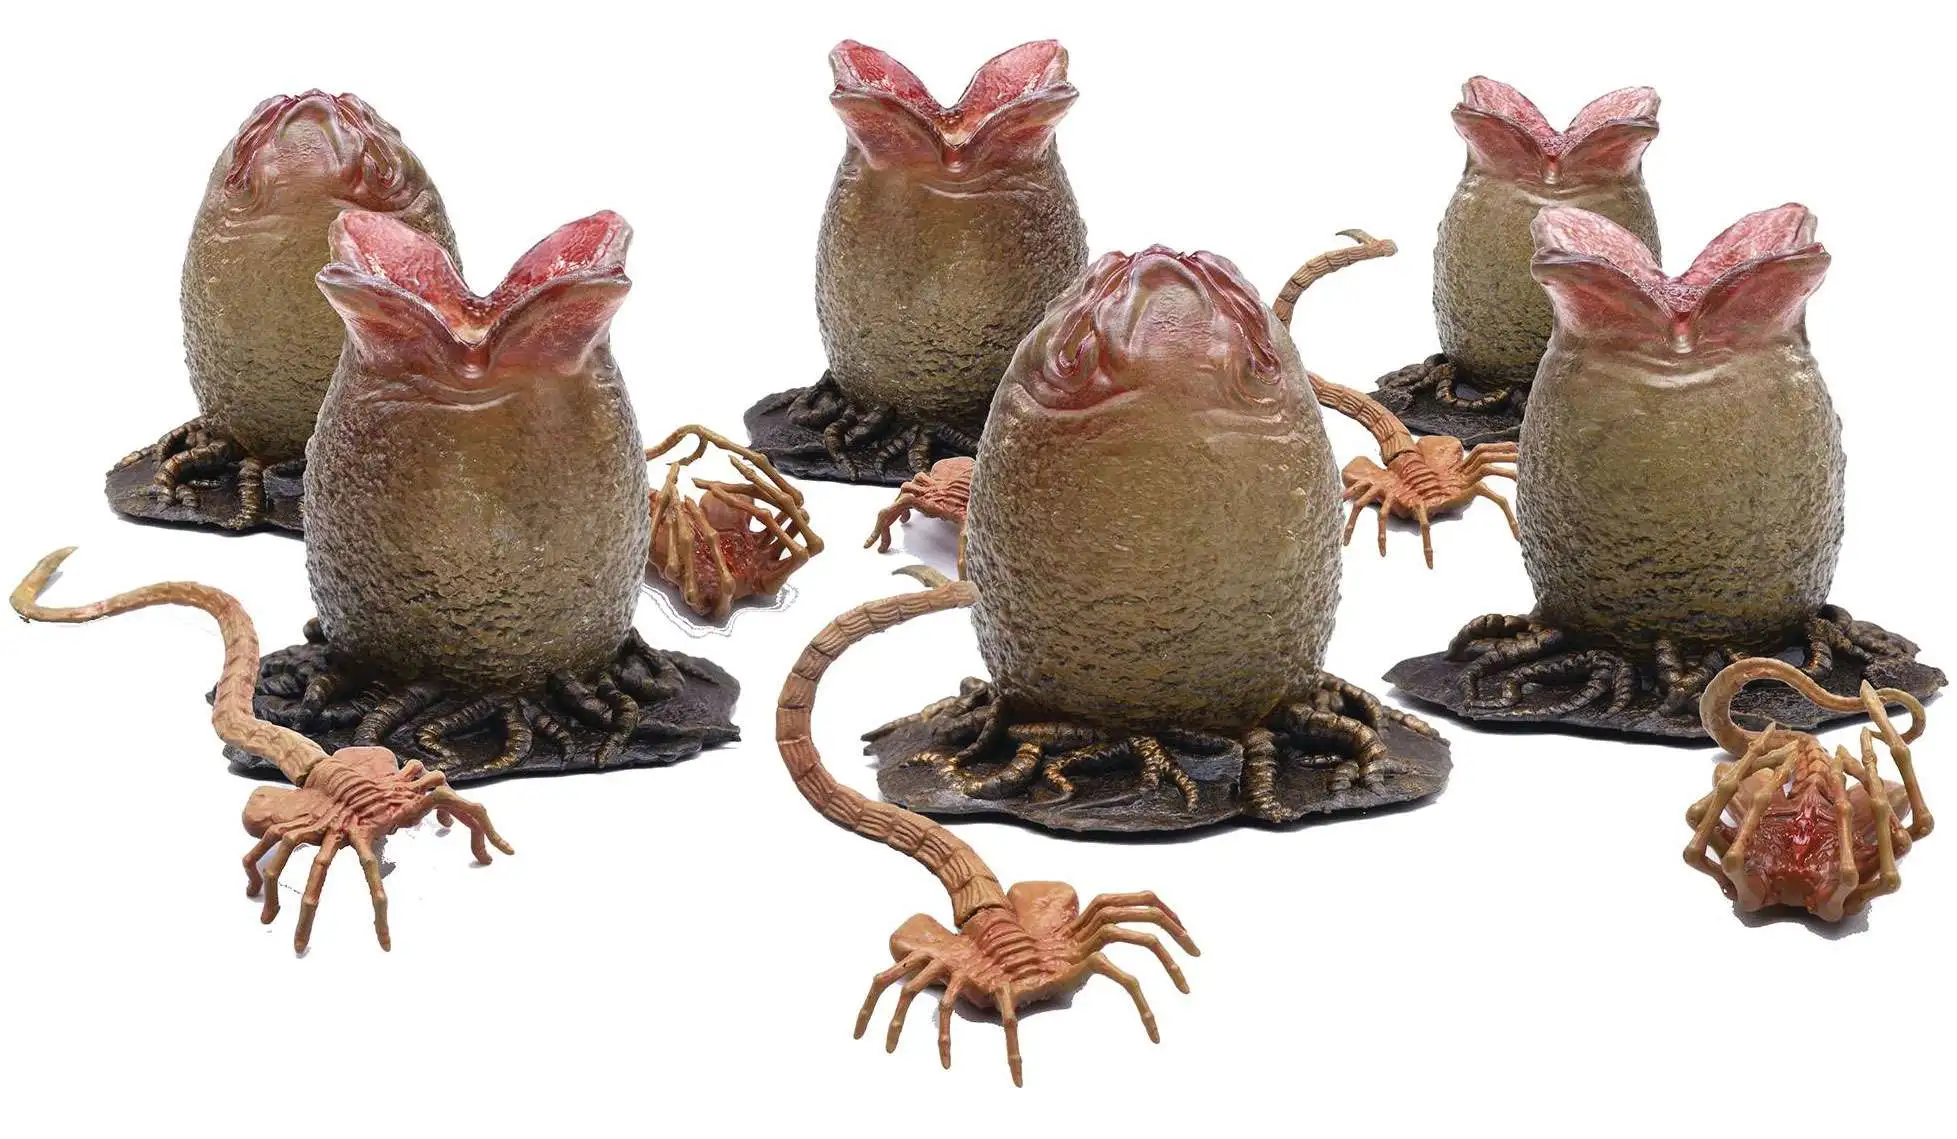 Alien Xenomorph Eggs Exclusive Action Figure [Alien 1979 Version]